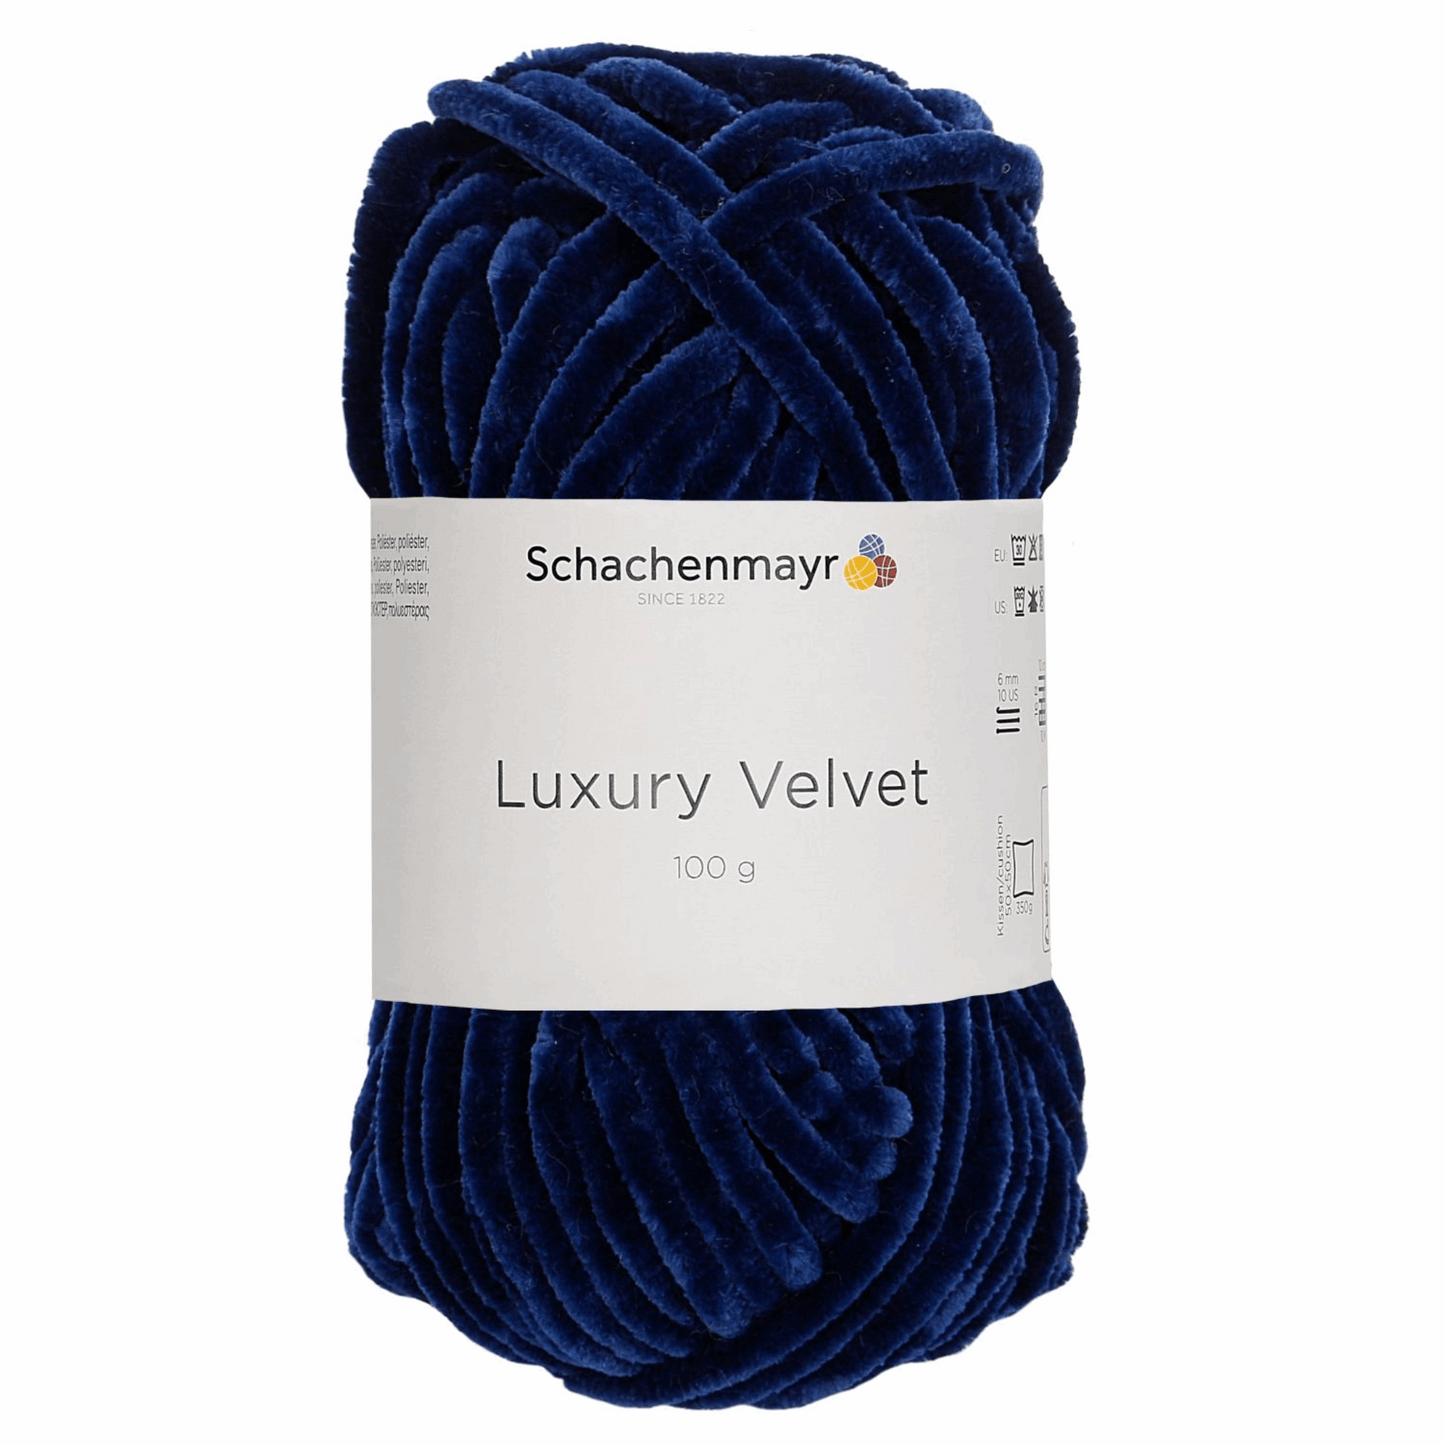 Schachenmayr Luxury Velvet 100g, 90592, color navy 50